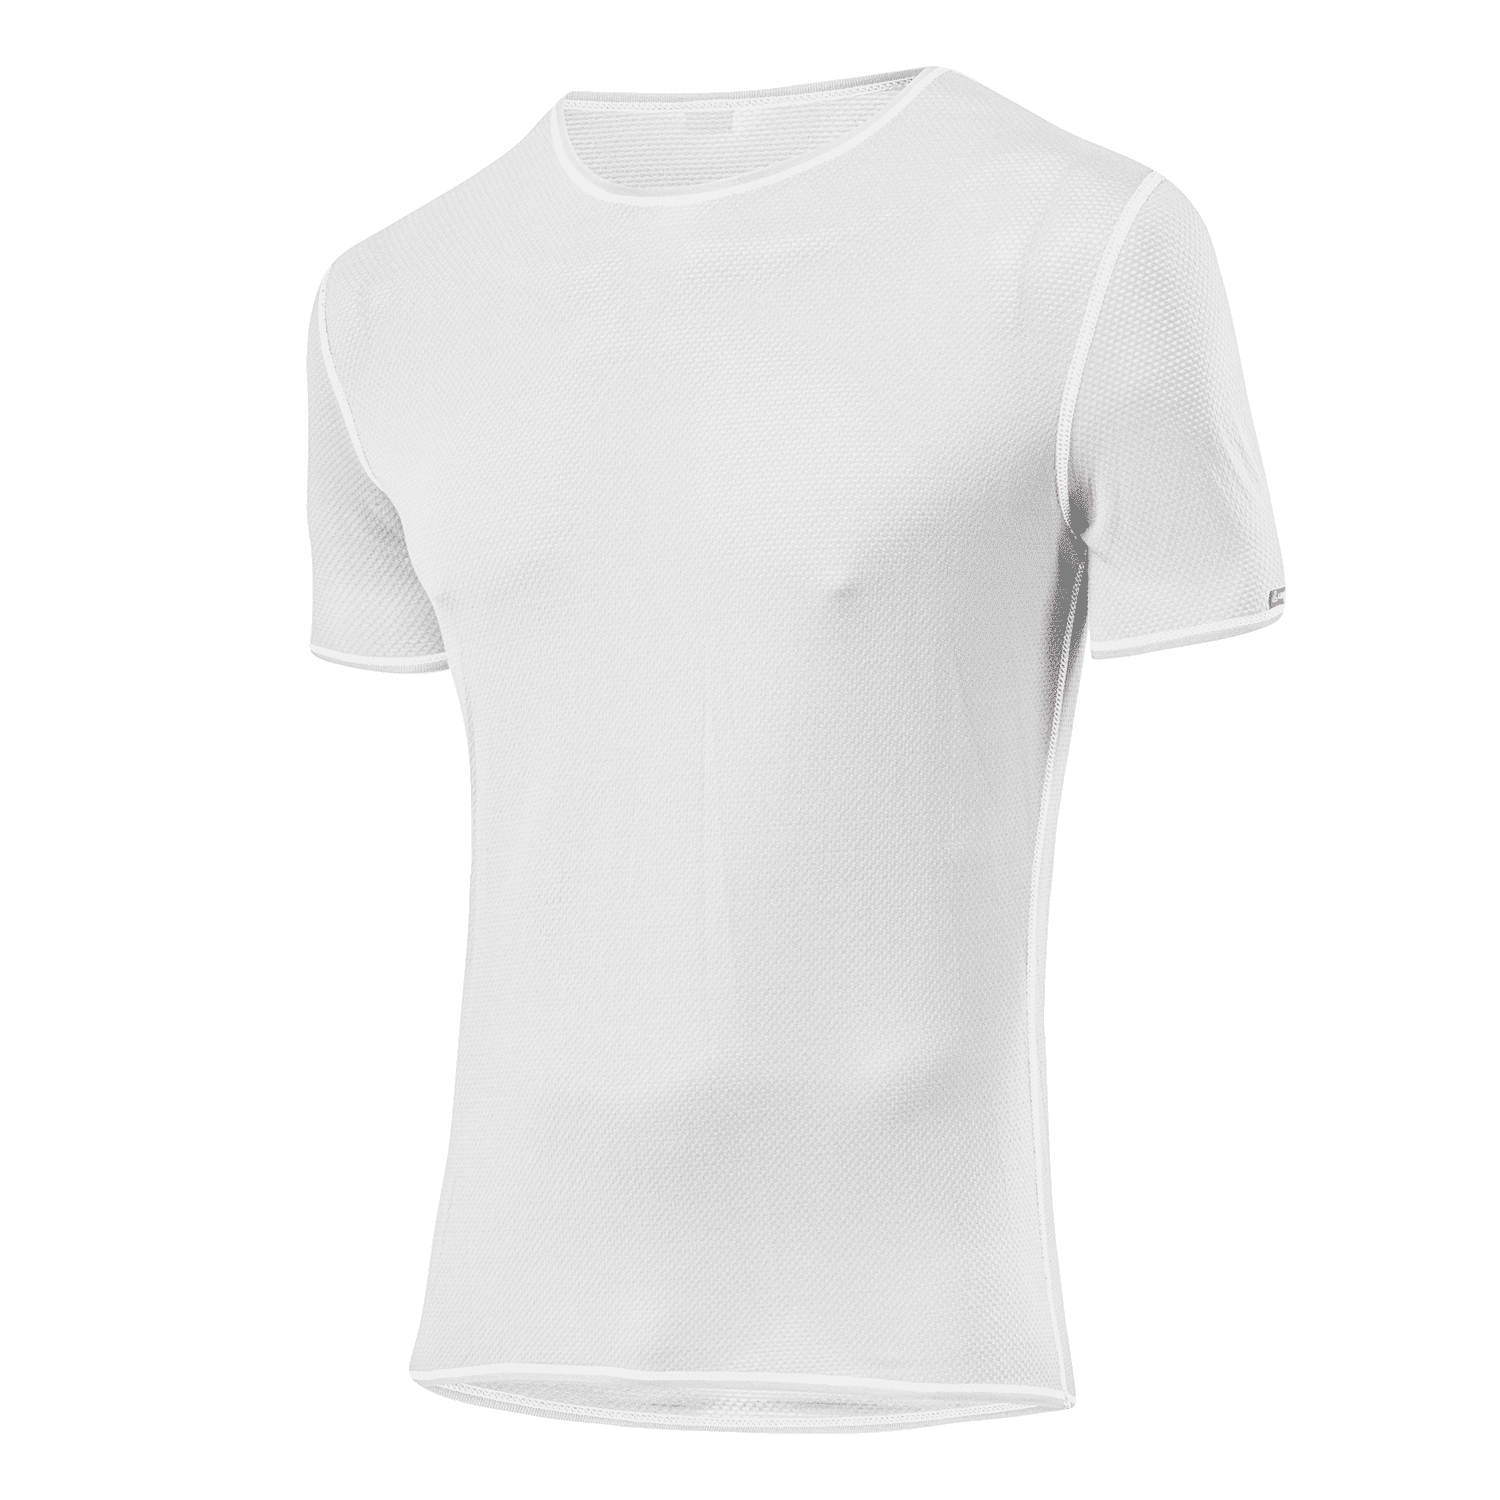 Loeffler Shirt S/S Transtex Light - Ondergoed - Heren